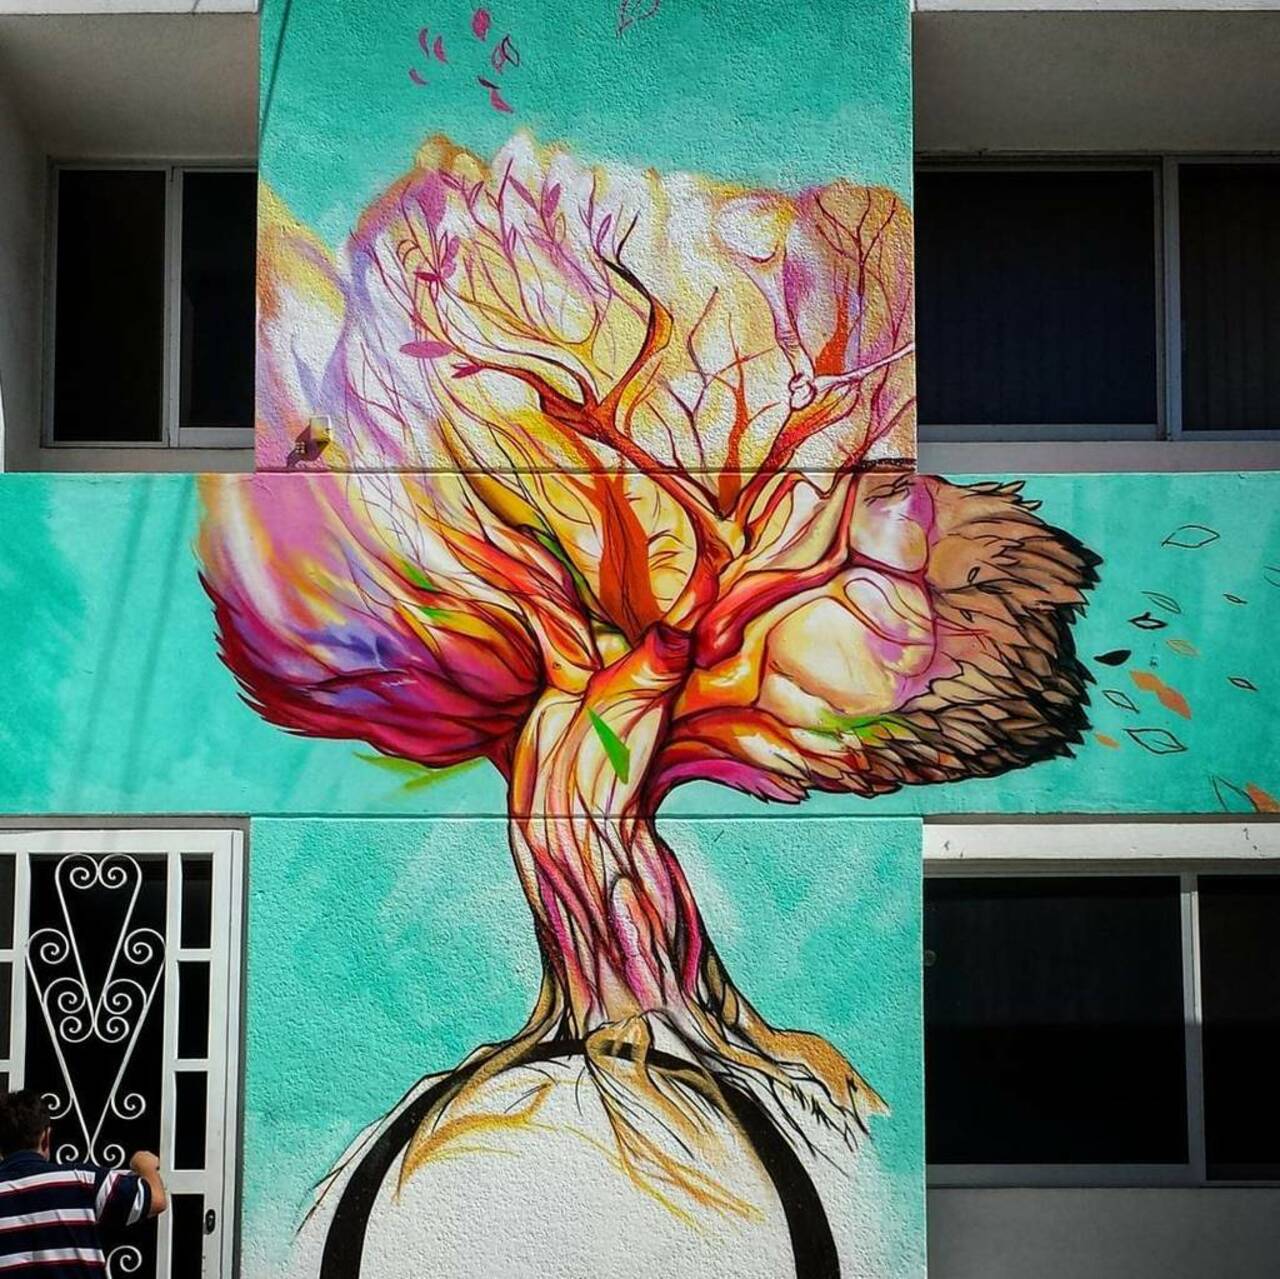 el arbol mágico #tree #arbol #StreetArt #lsdart  #lsdtrip #artemexicano #arteurbano #streetartmexico #graffiti #ins… http://t.co/GSbwSMg5OB